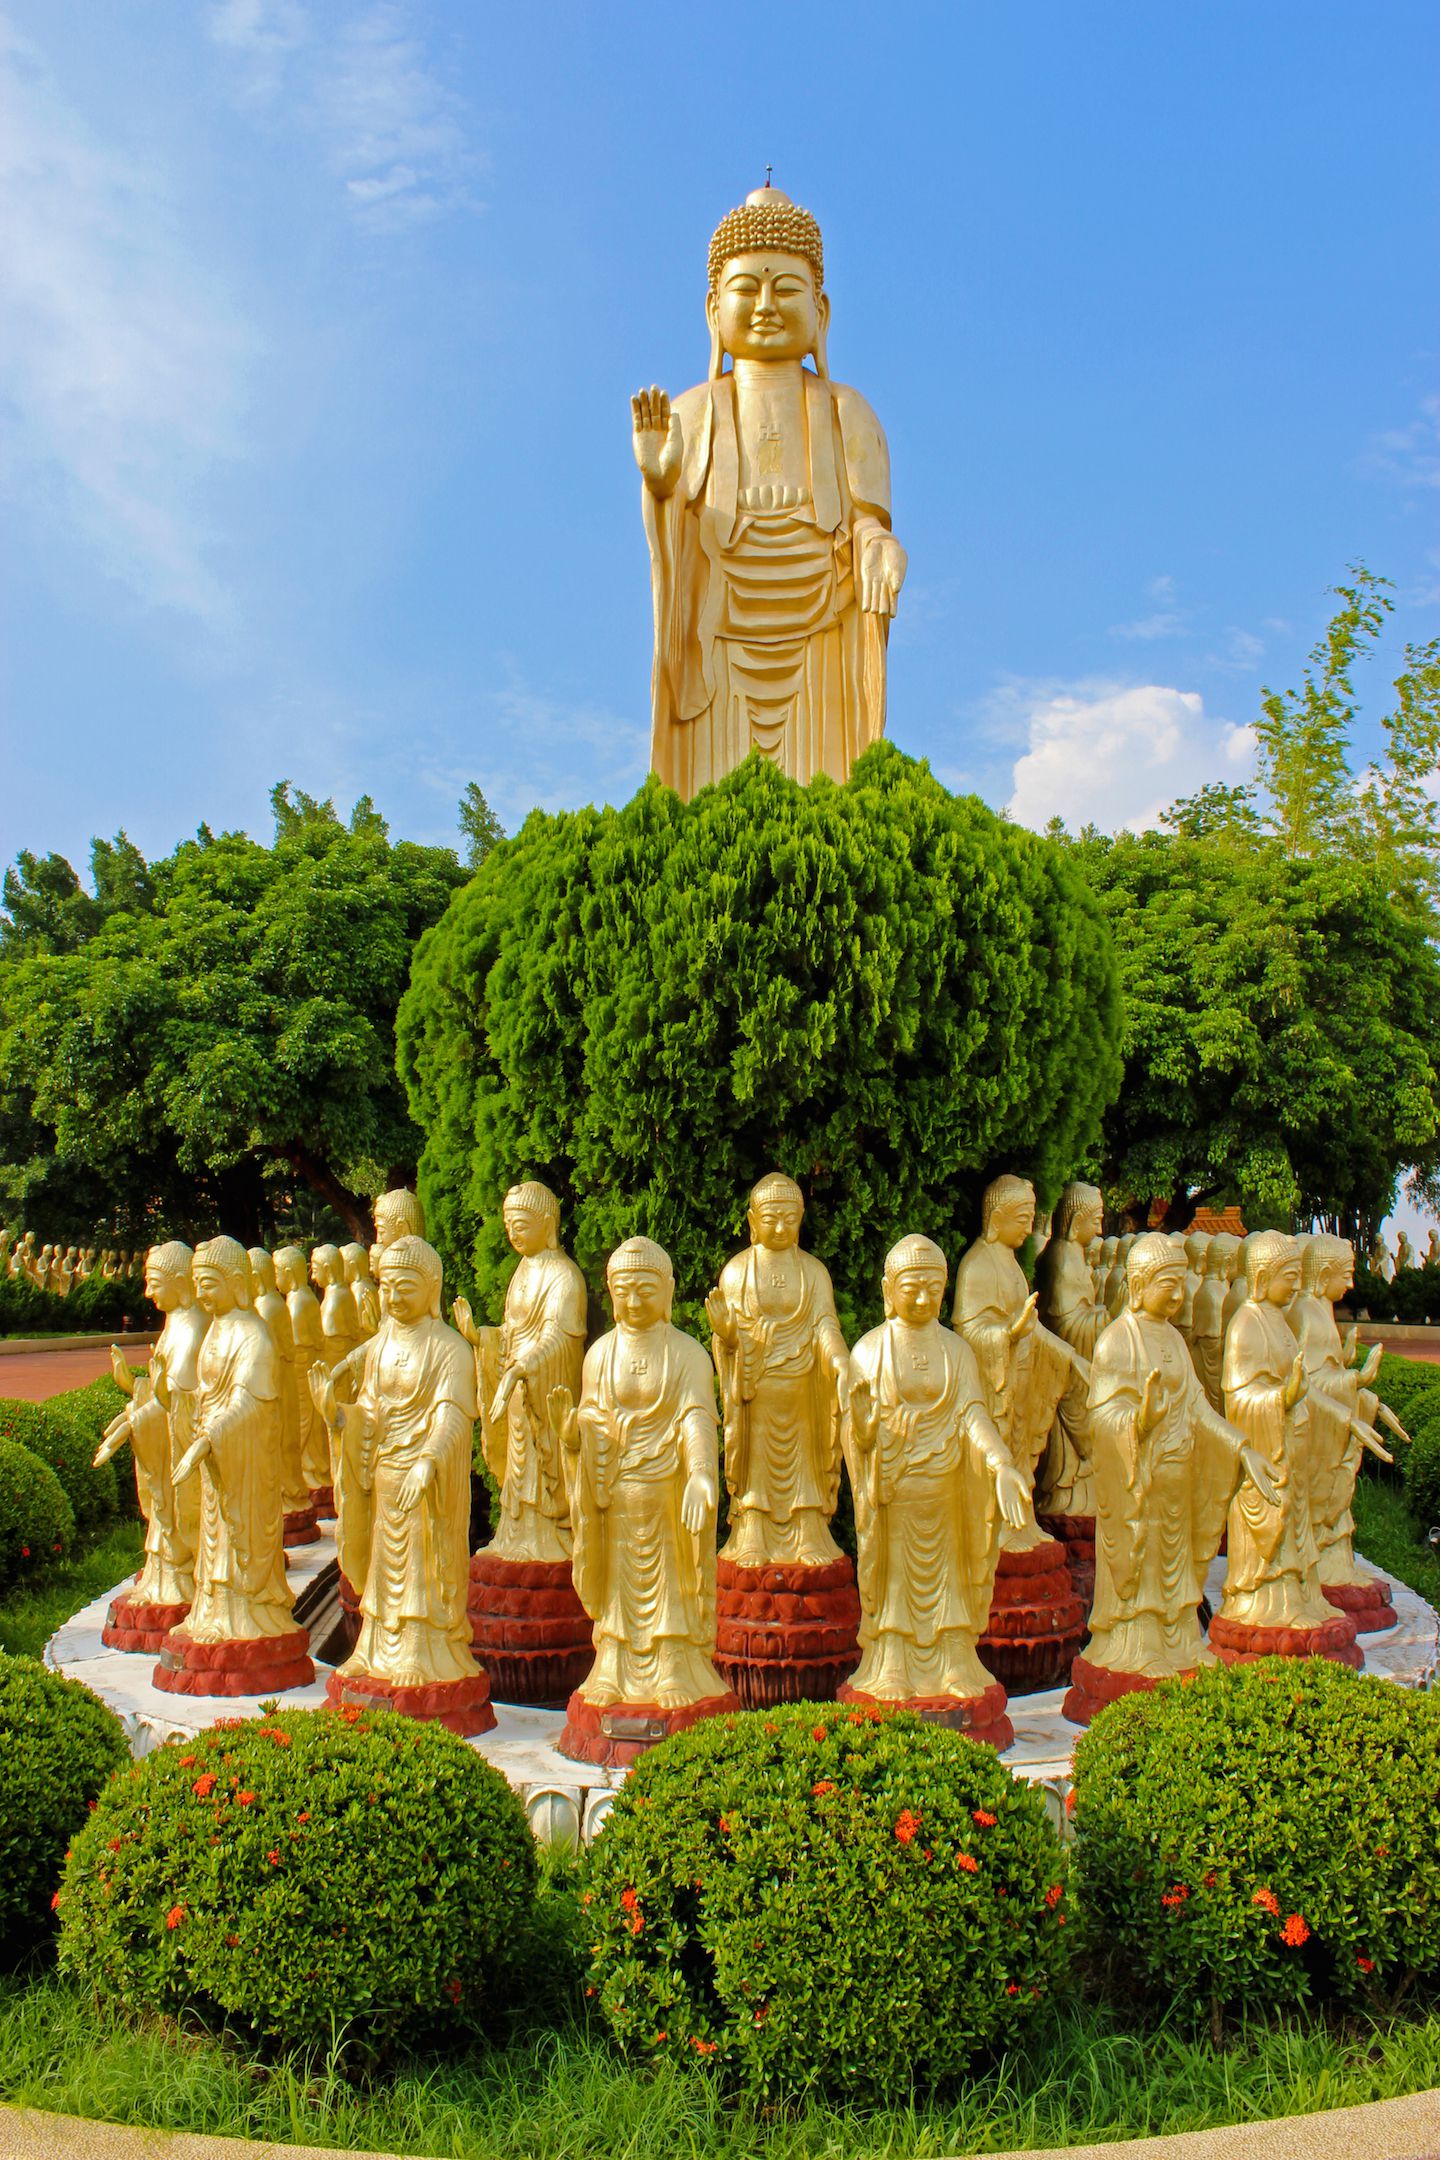 Amitabha Buddha surrounded by smaller standing Buddhas